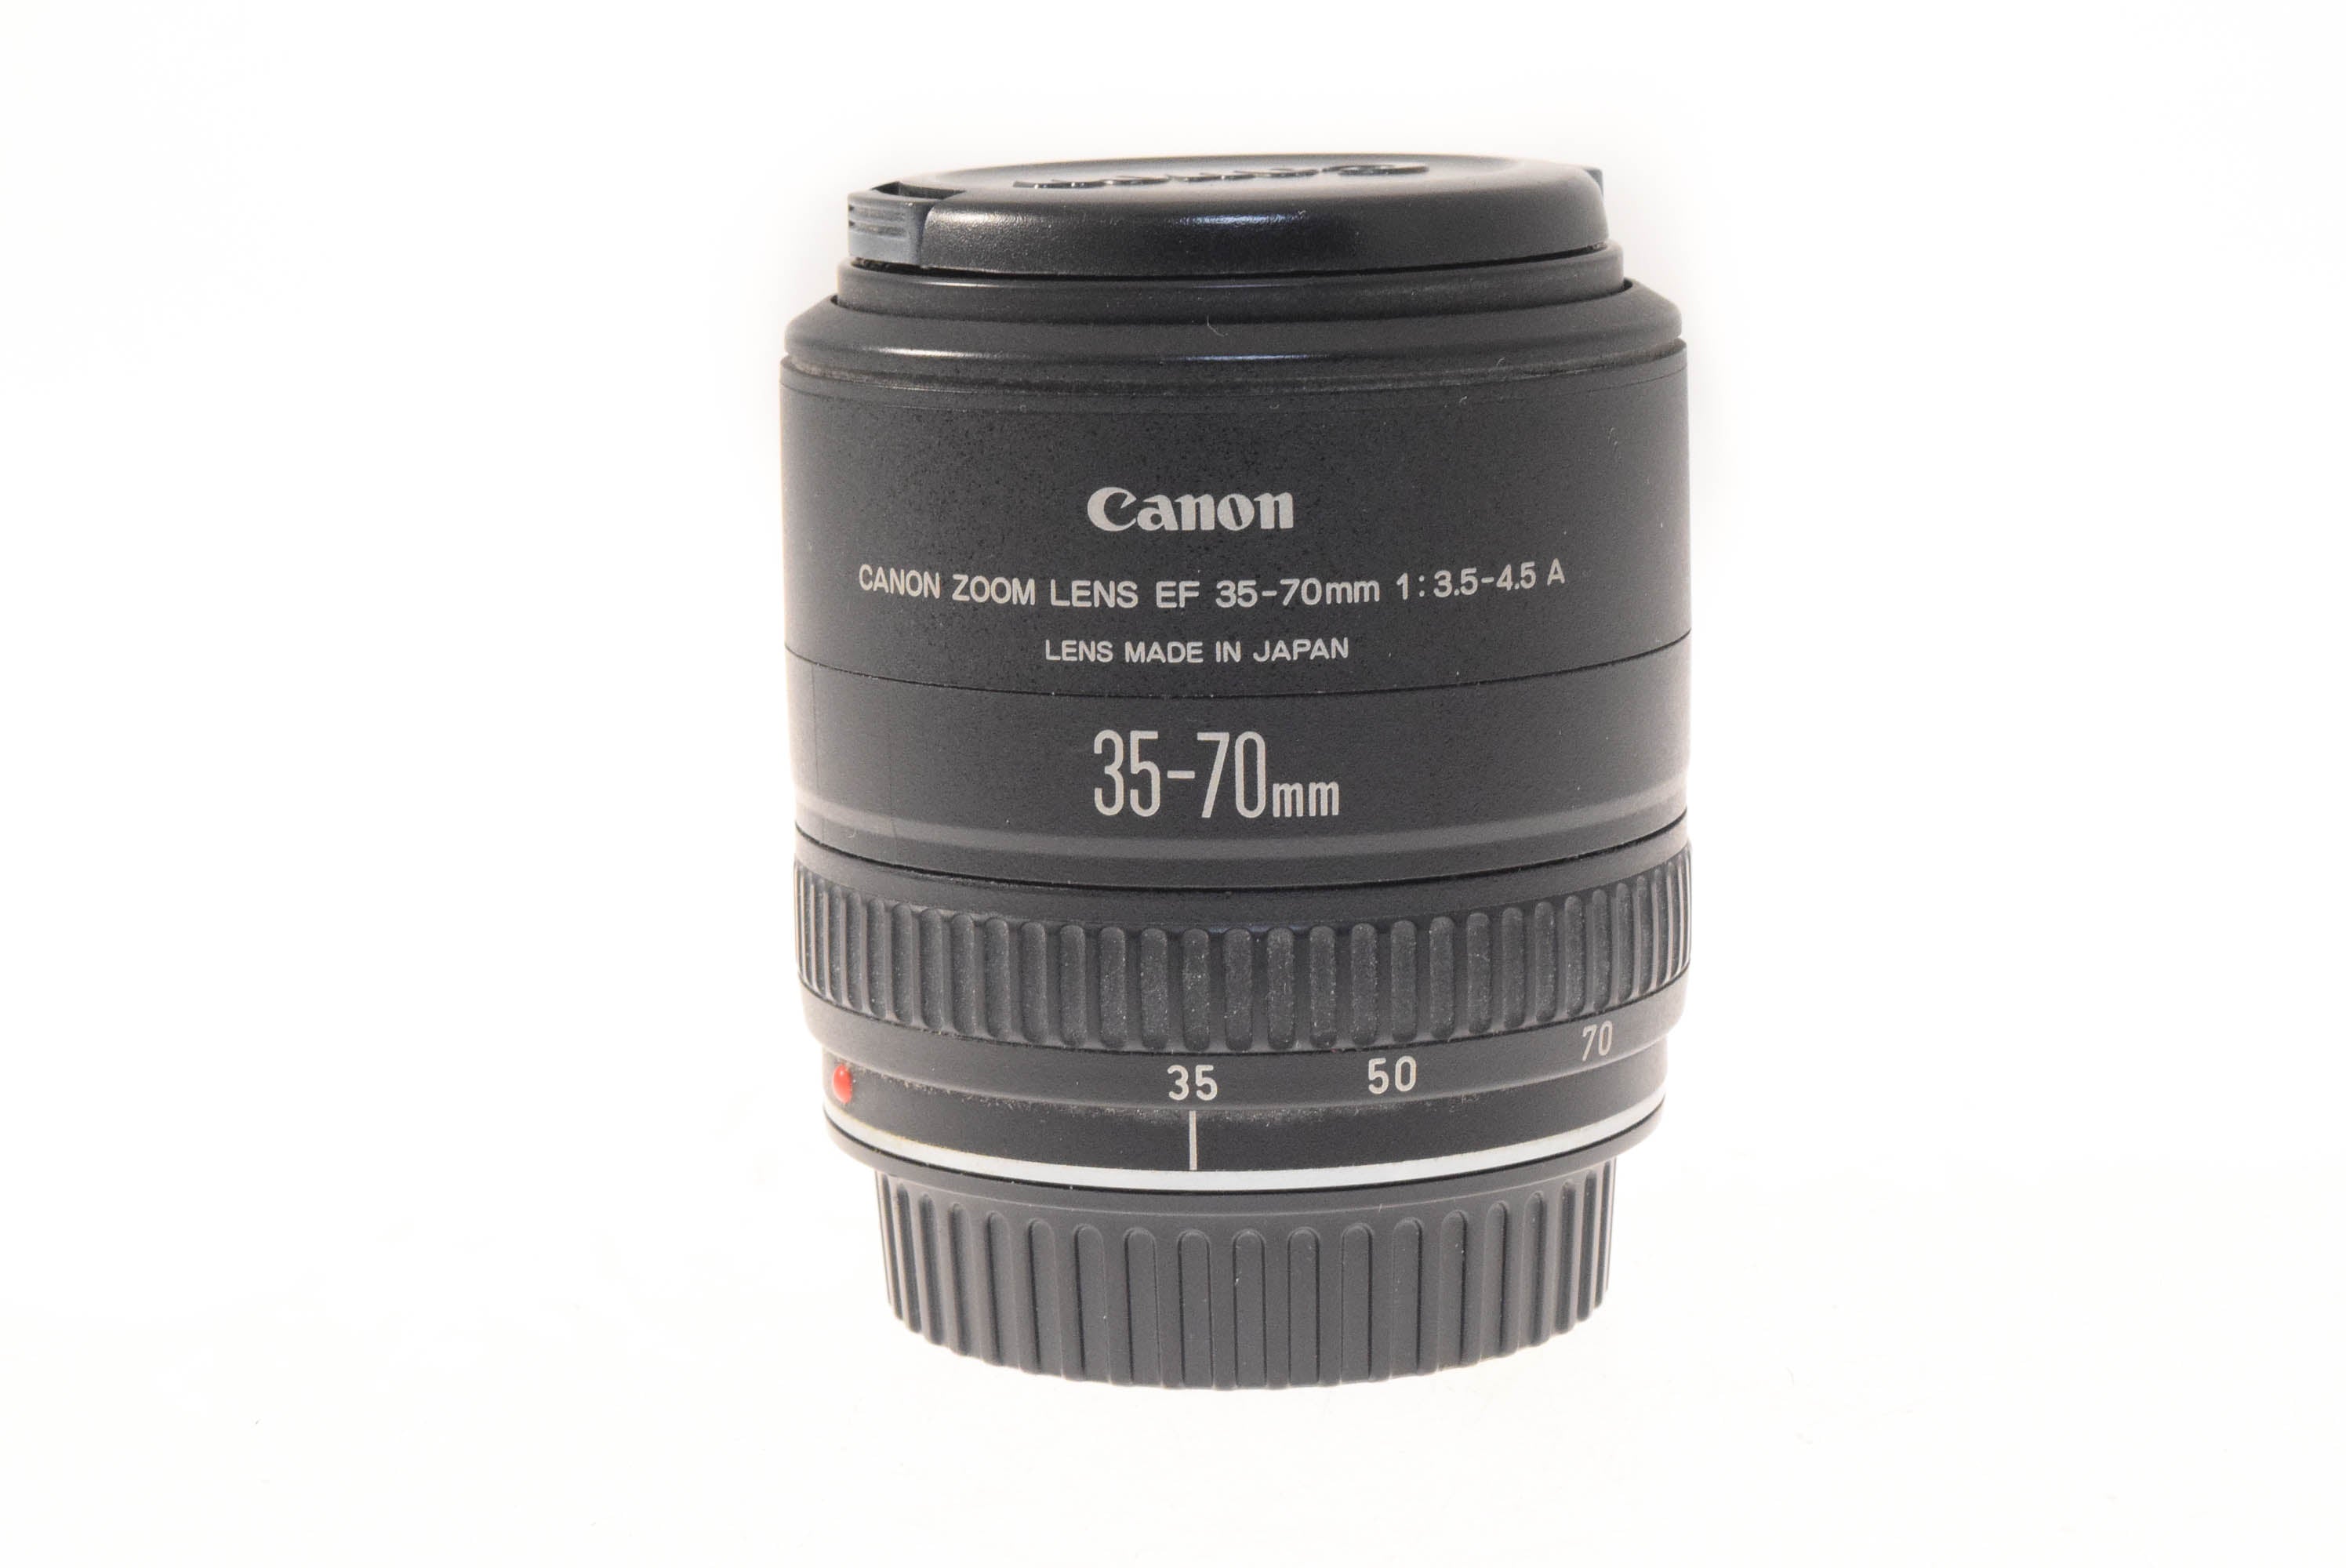 Canon 35-70mm f3.5-4.5 A